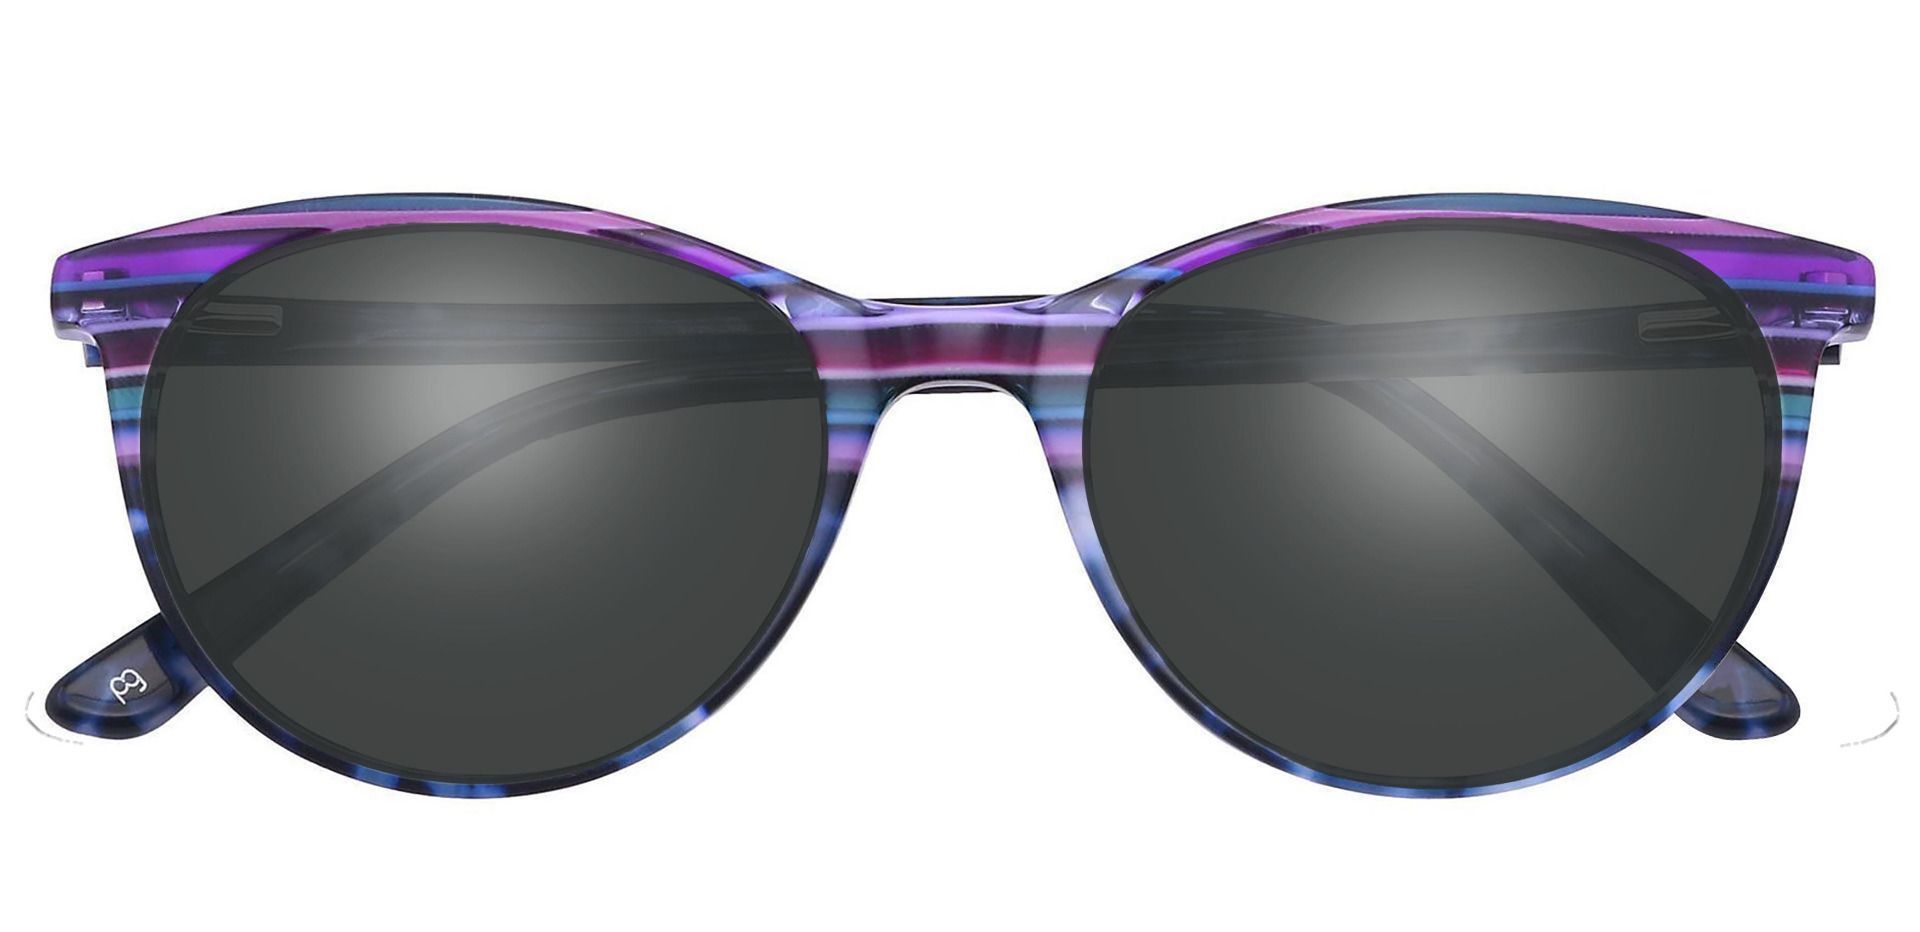 Patagonia Oval Progressive Sunglasses - Purple Frame With Gray Lenses ...